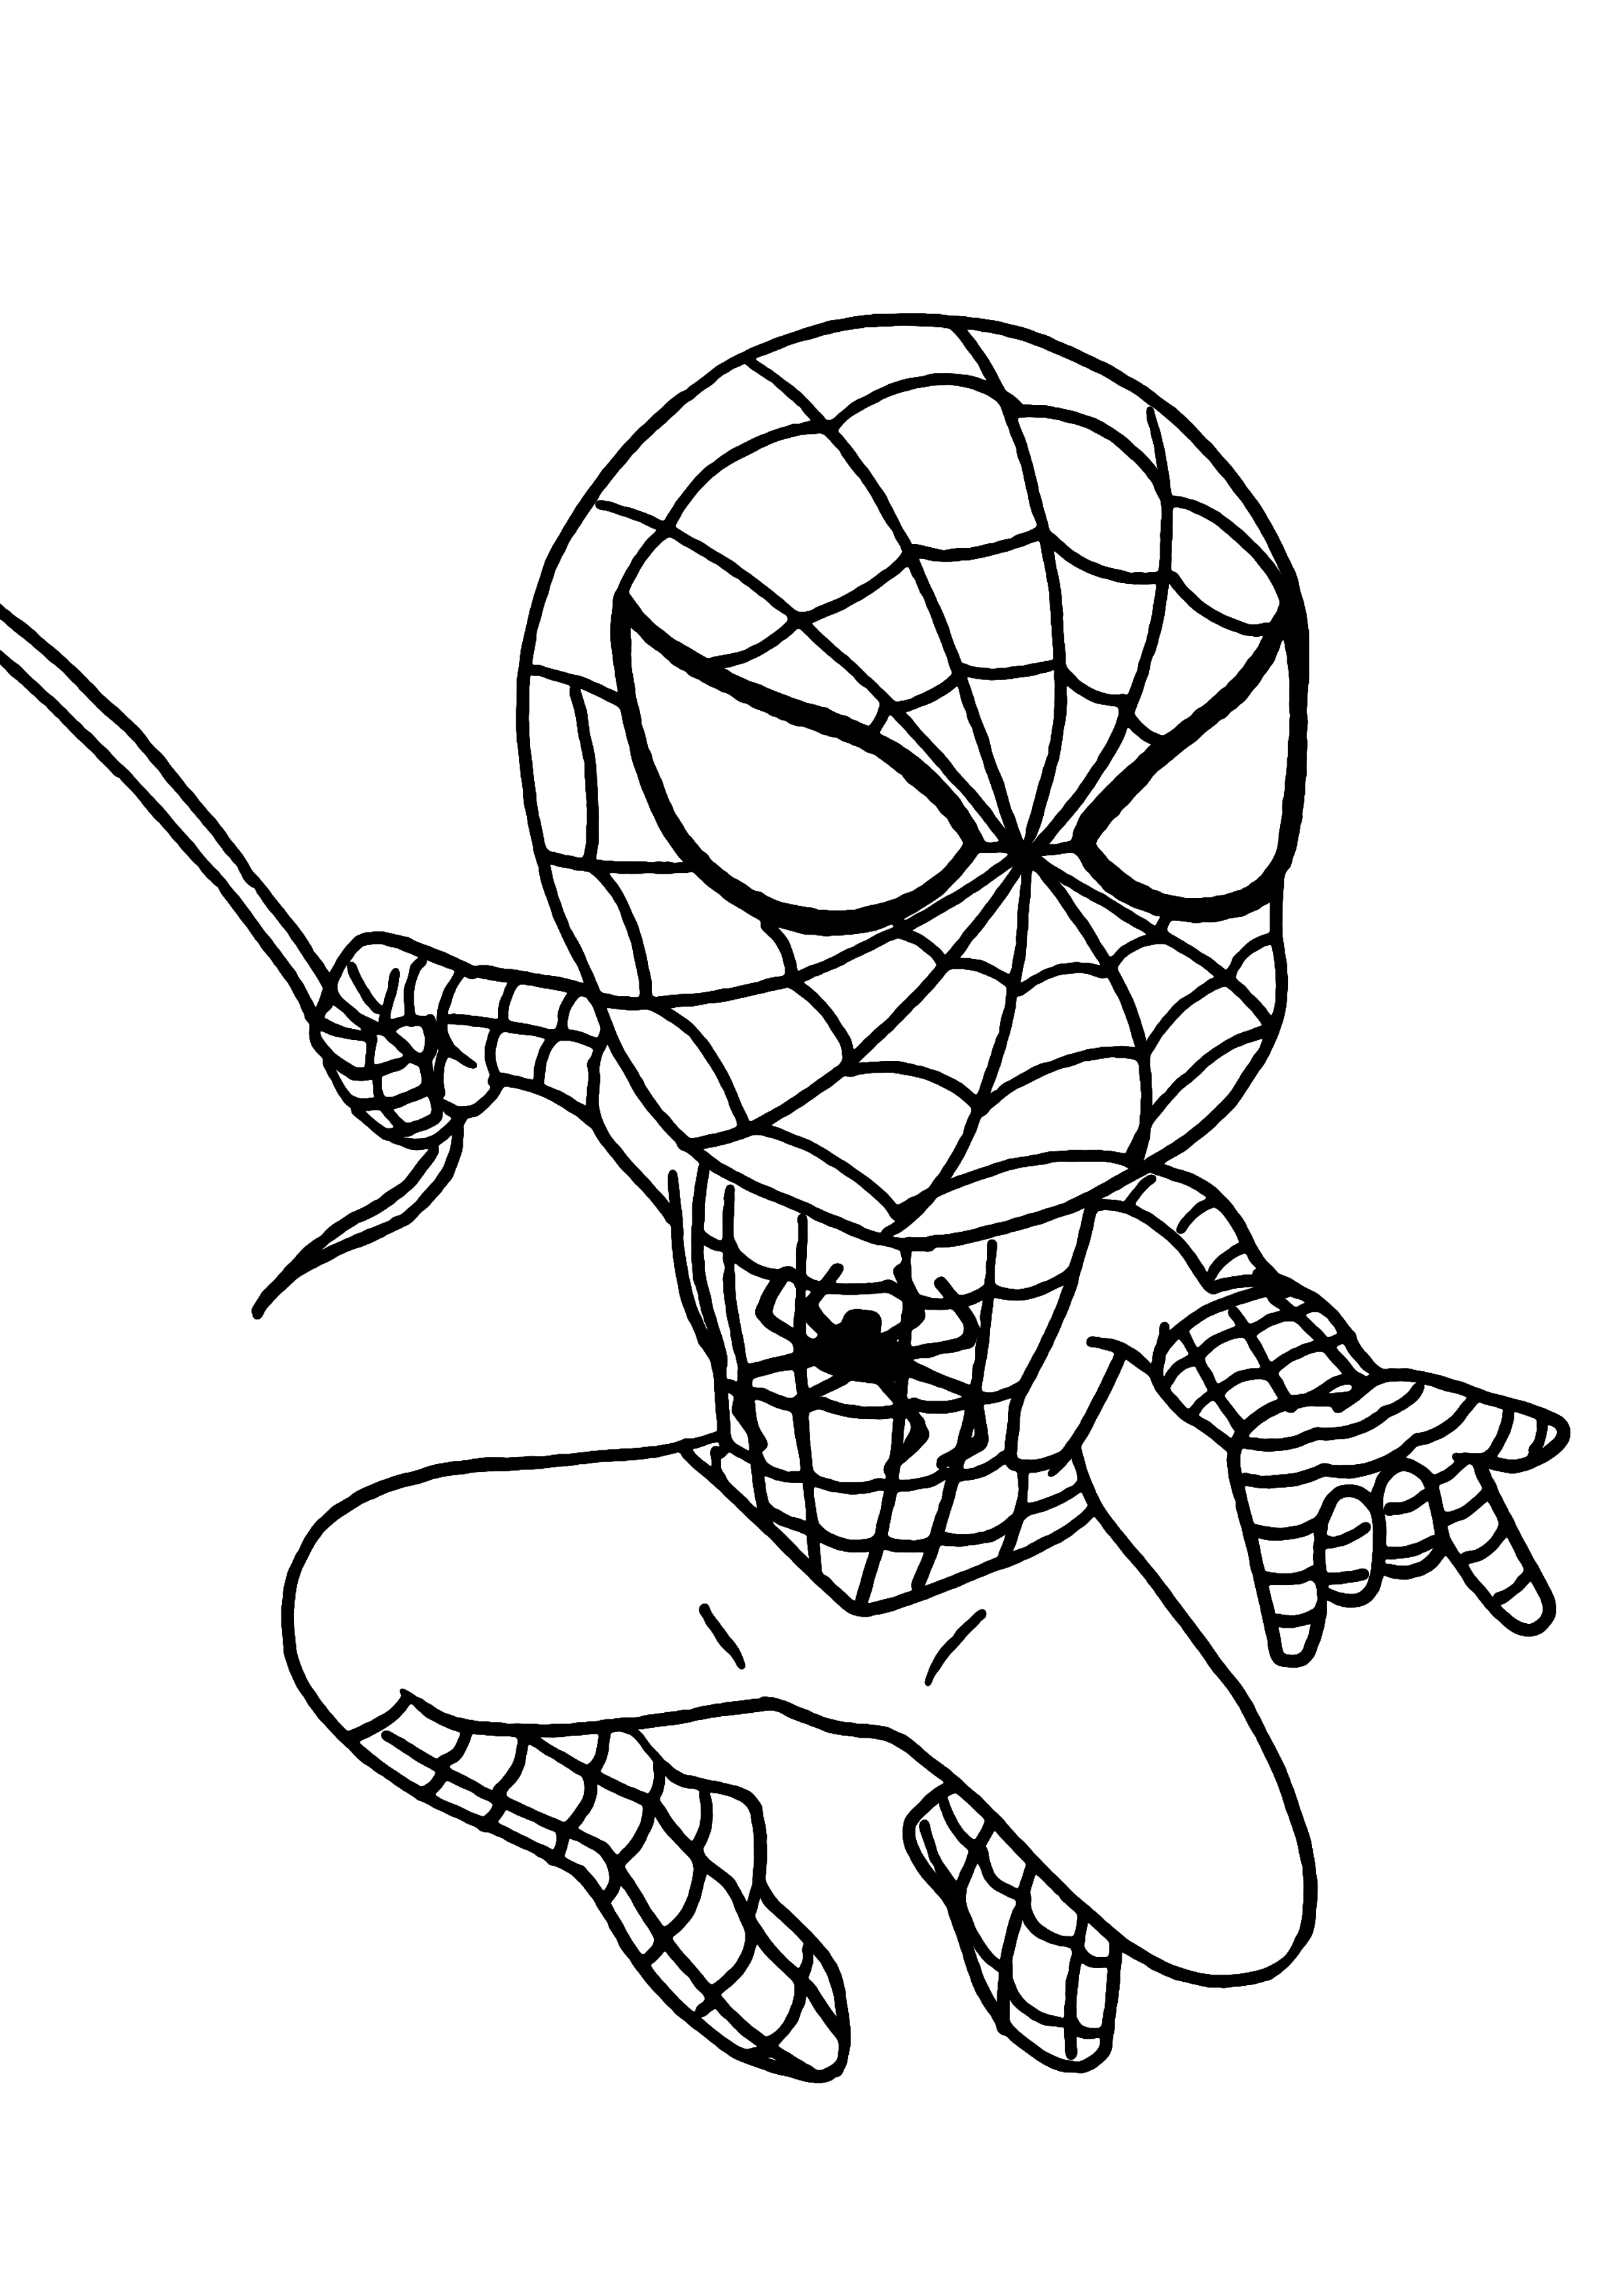 Drawing Marvel Super Heroes #79900 (Superheroes) – Printable coloring pages